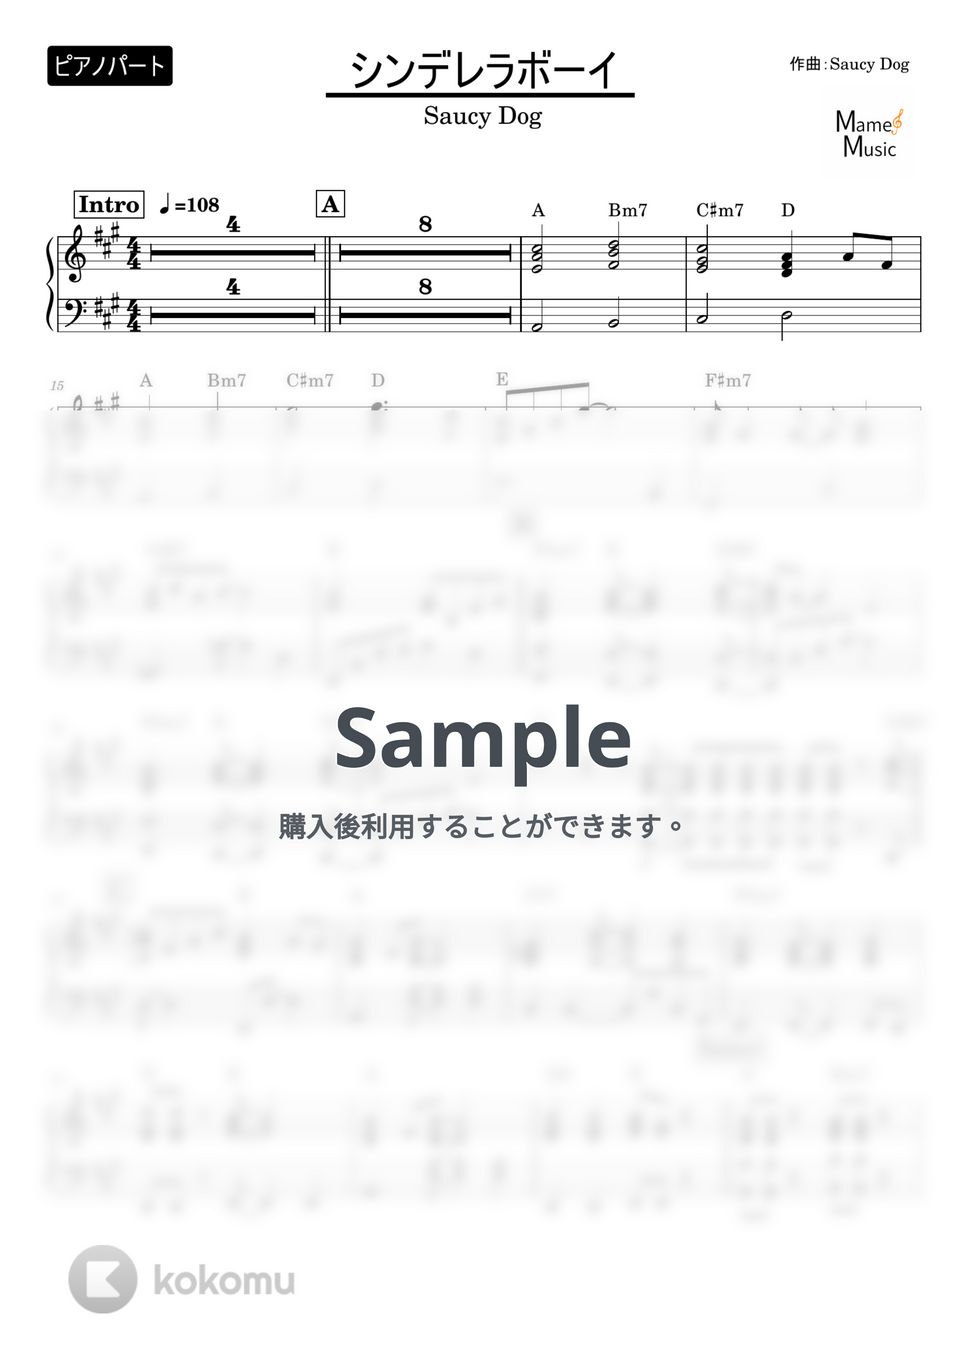 Saucy Dog - シンデレラボーイ (ピアノパート) by mame